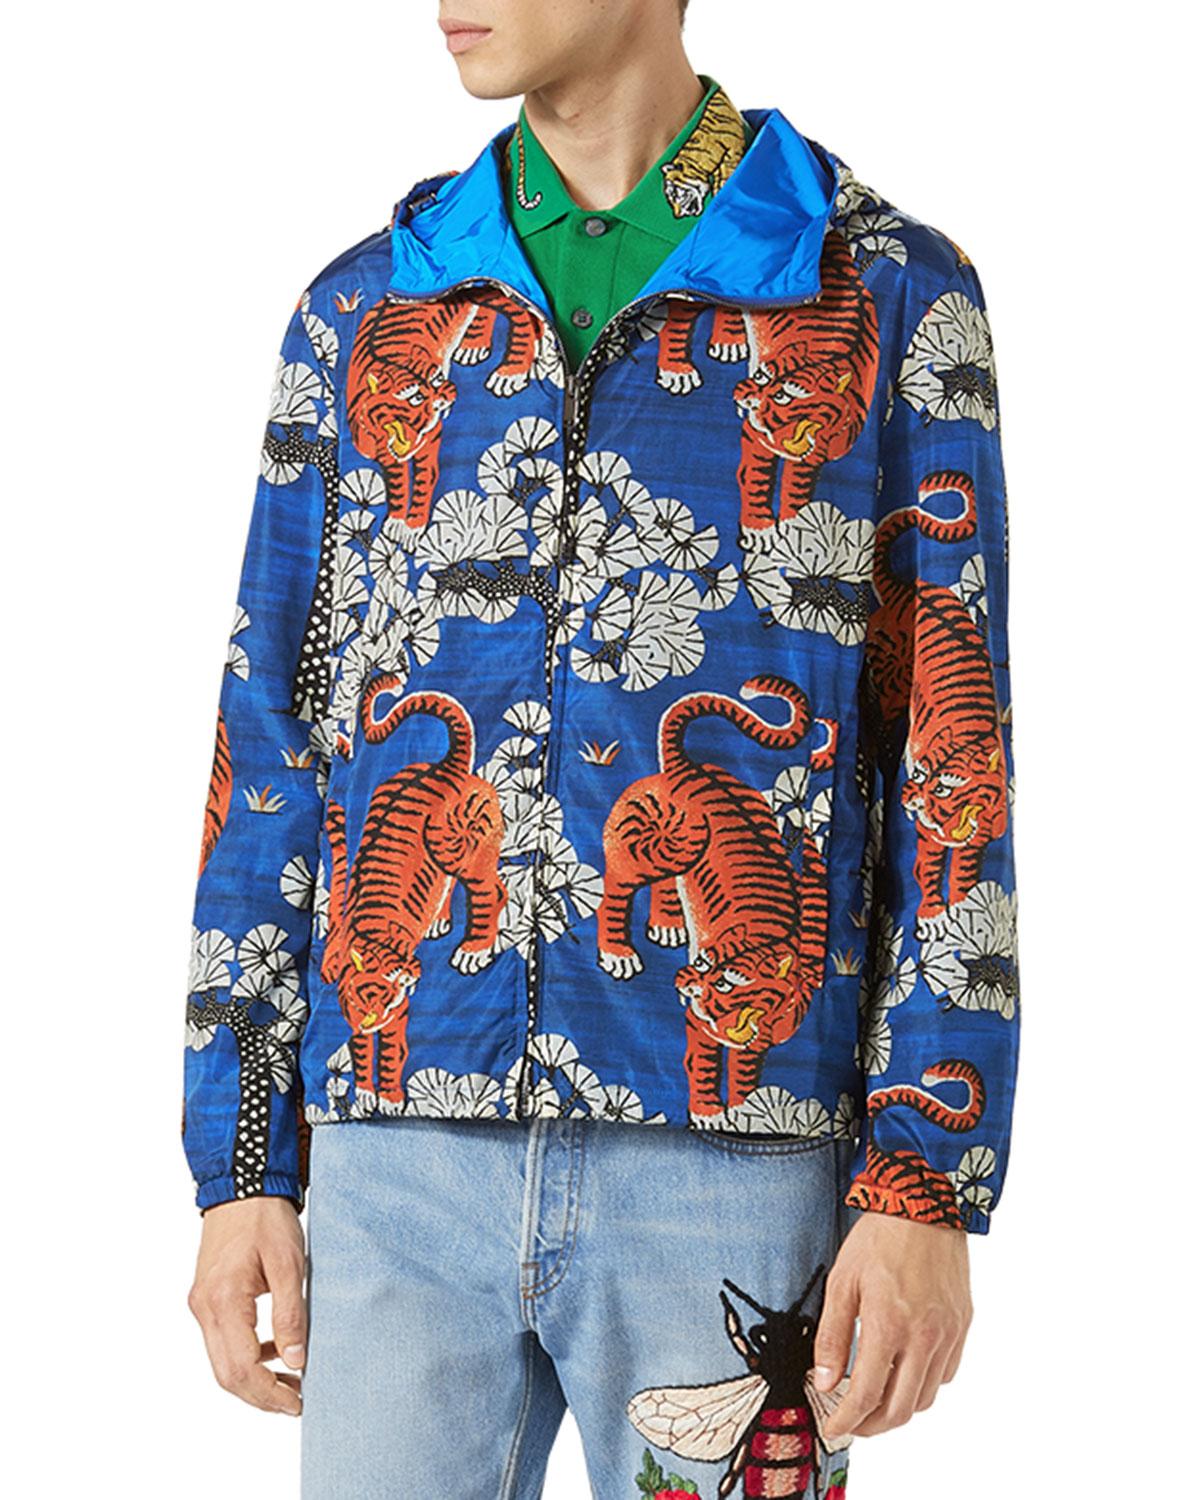 bengal tiger gucci jacket